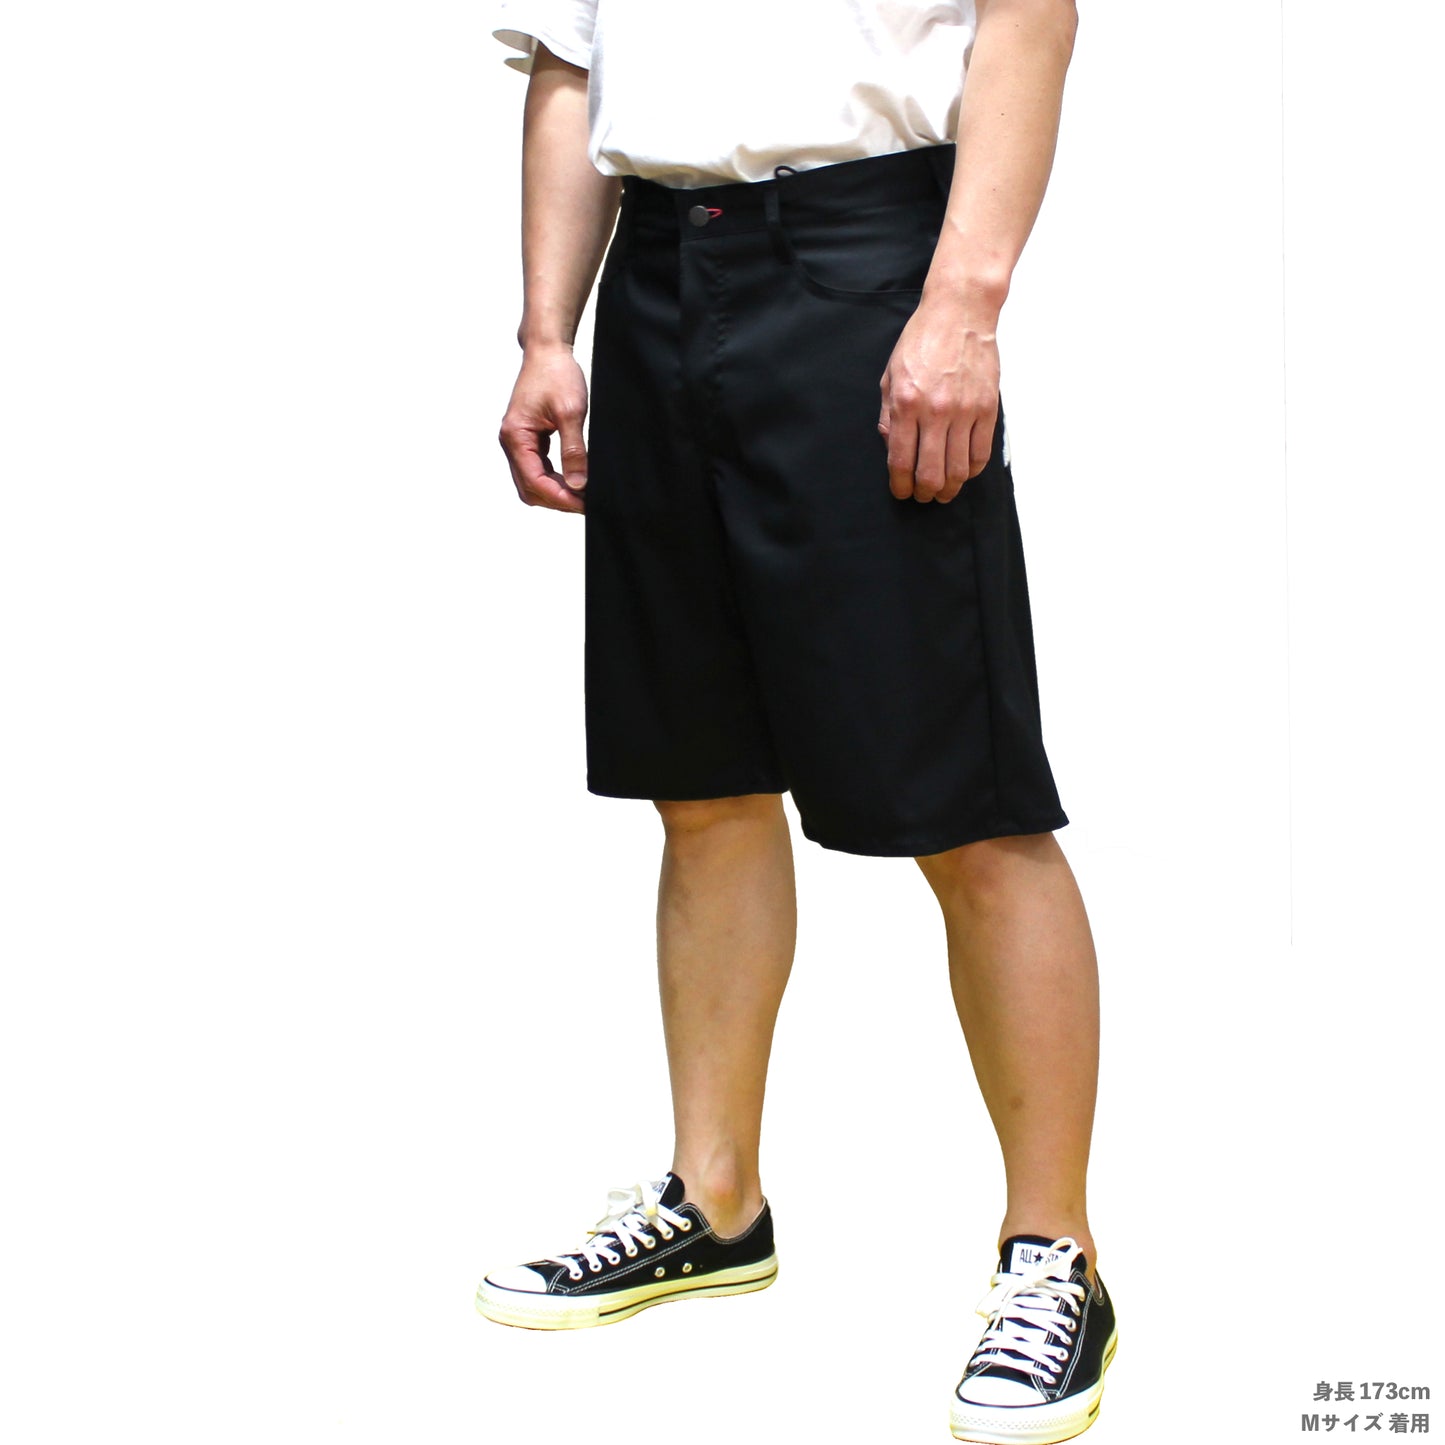 iggy shorts ICON BLACK / イギーショーツ アイコン ブラック